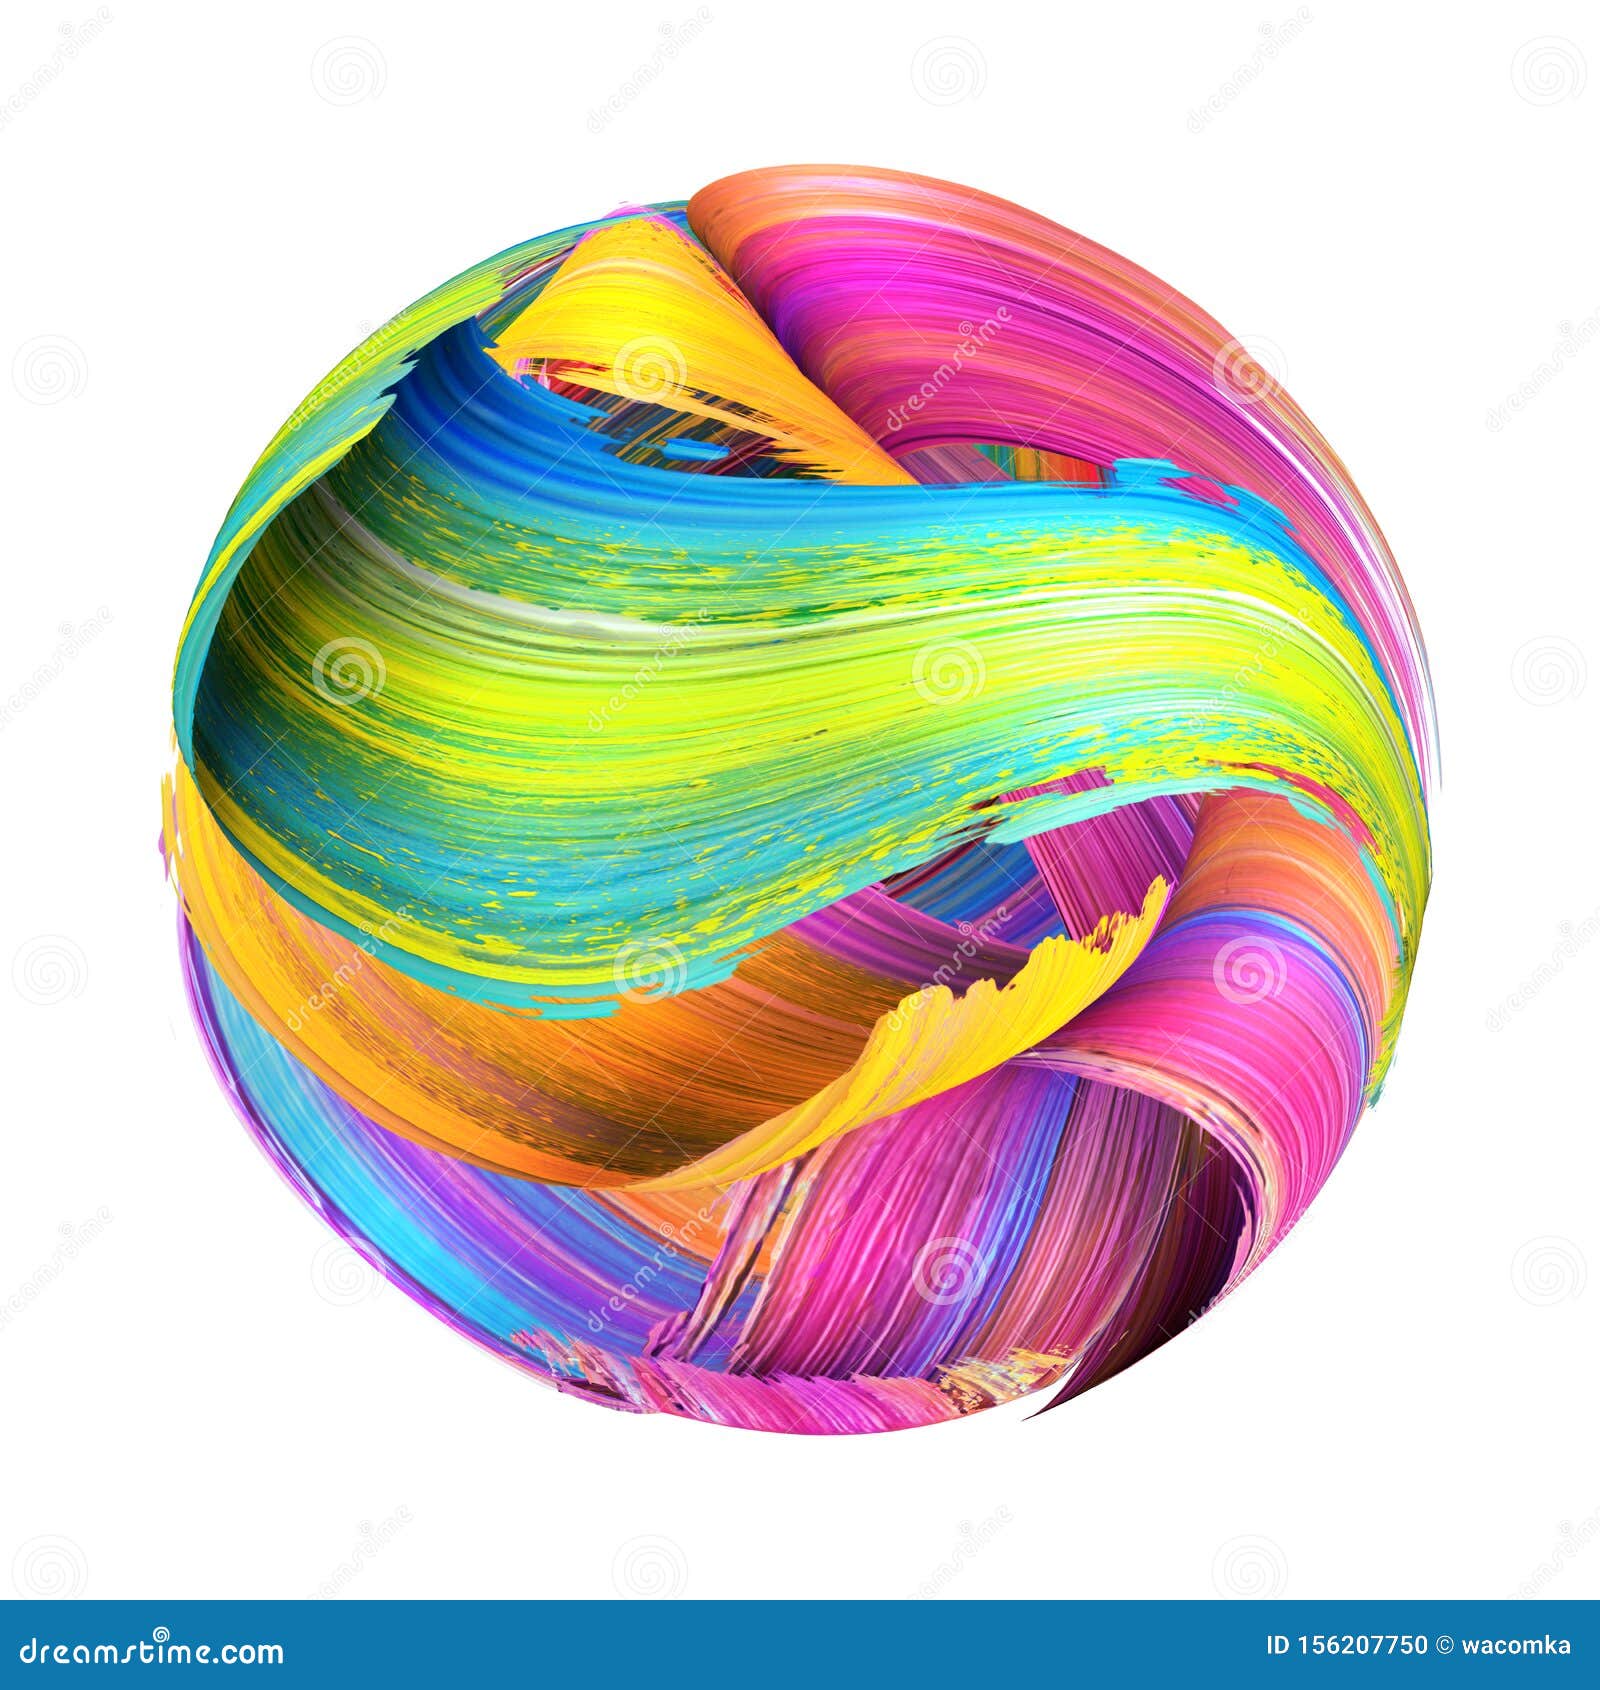 https://thumbs.dreamstime.com/z/d-render-round-shape-made-abstract-brush-strokes-paint-splash-splatter-colorful-curl-artistic-spiral-vivid-ribbon-156207750.jpg